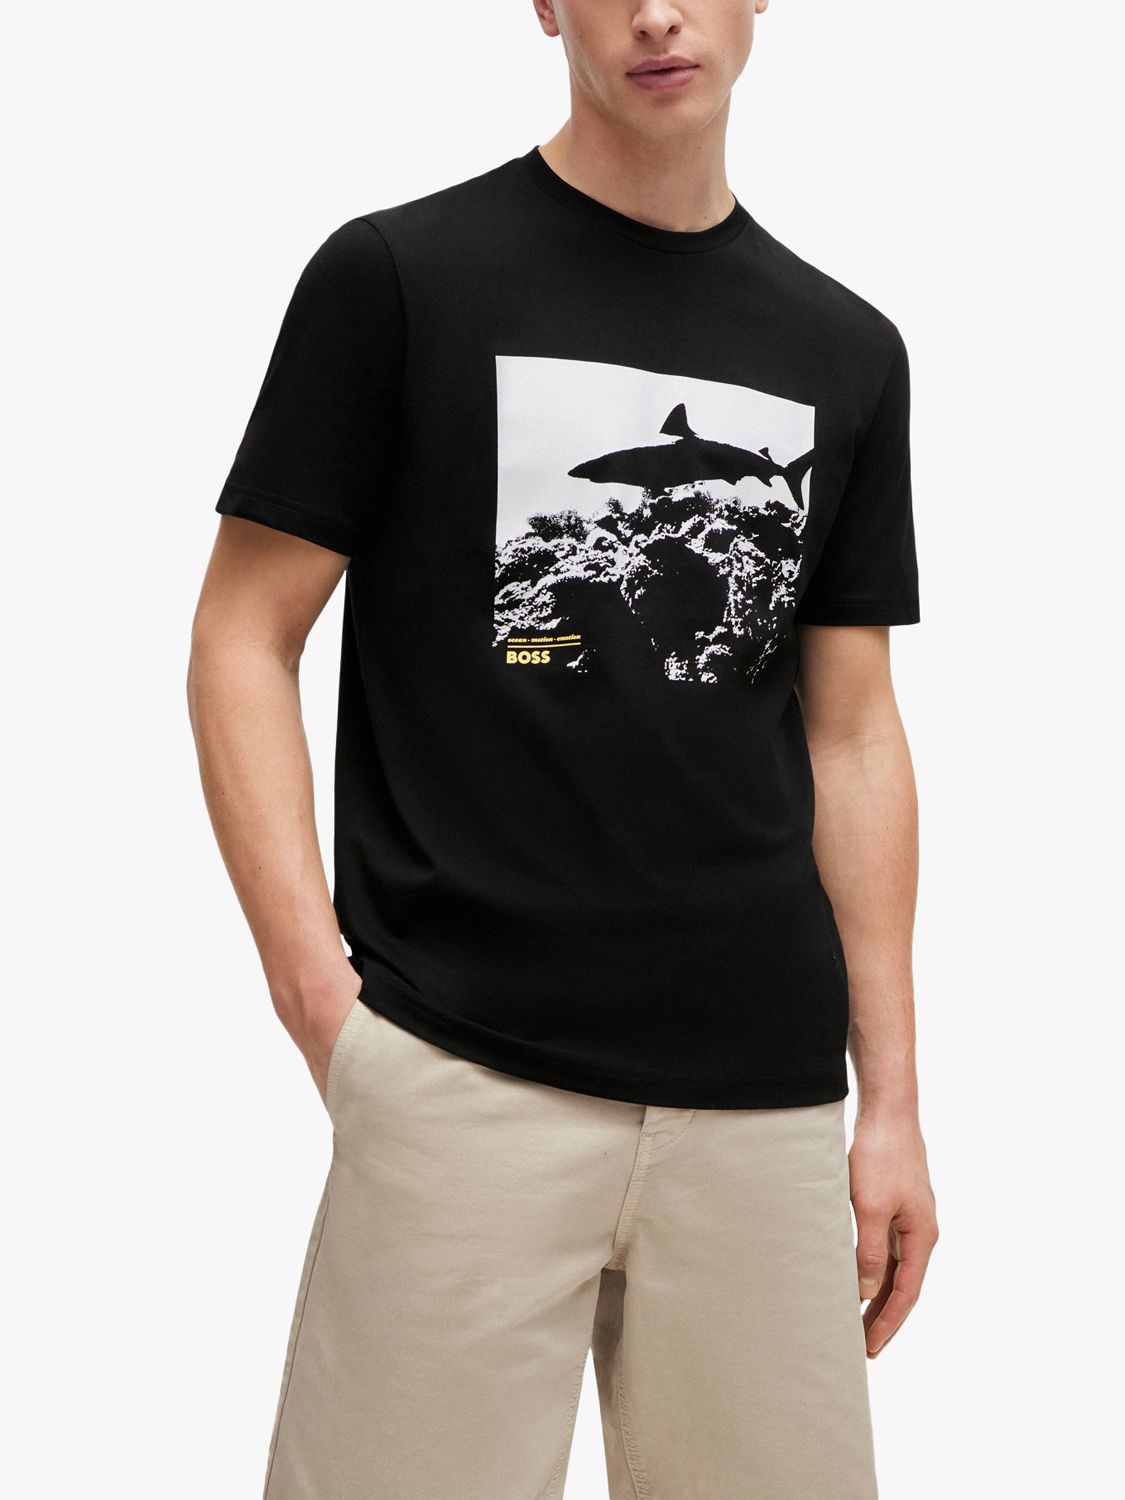 BOSS Sea Horse Graphic T-Shirt, Black, XXXL